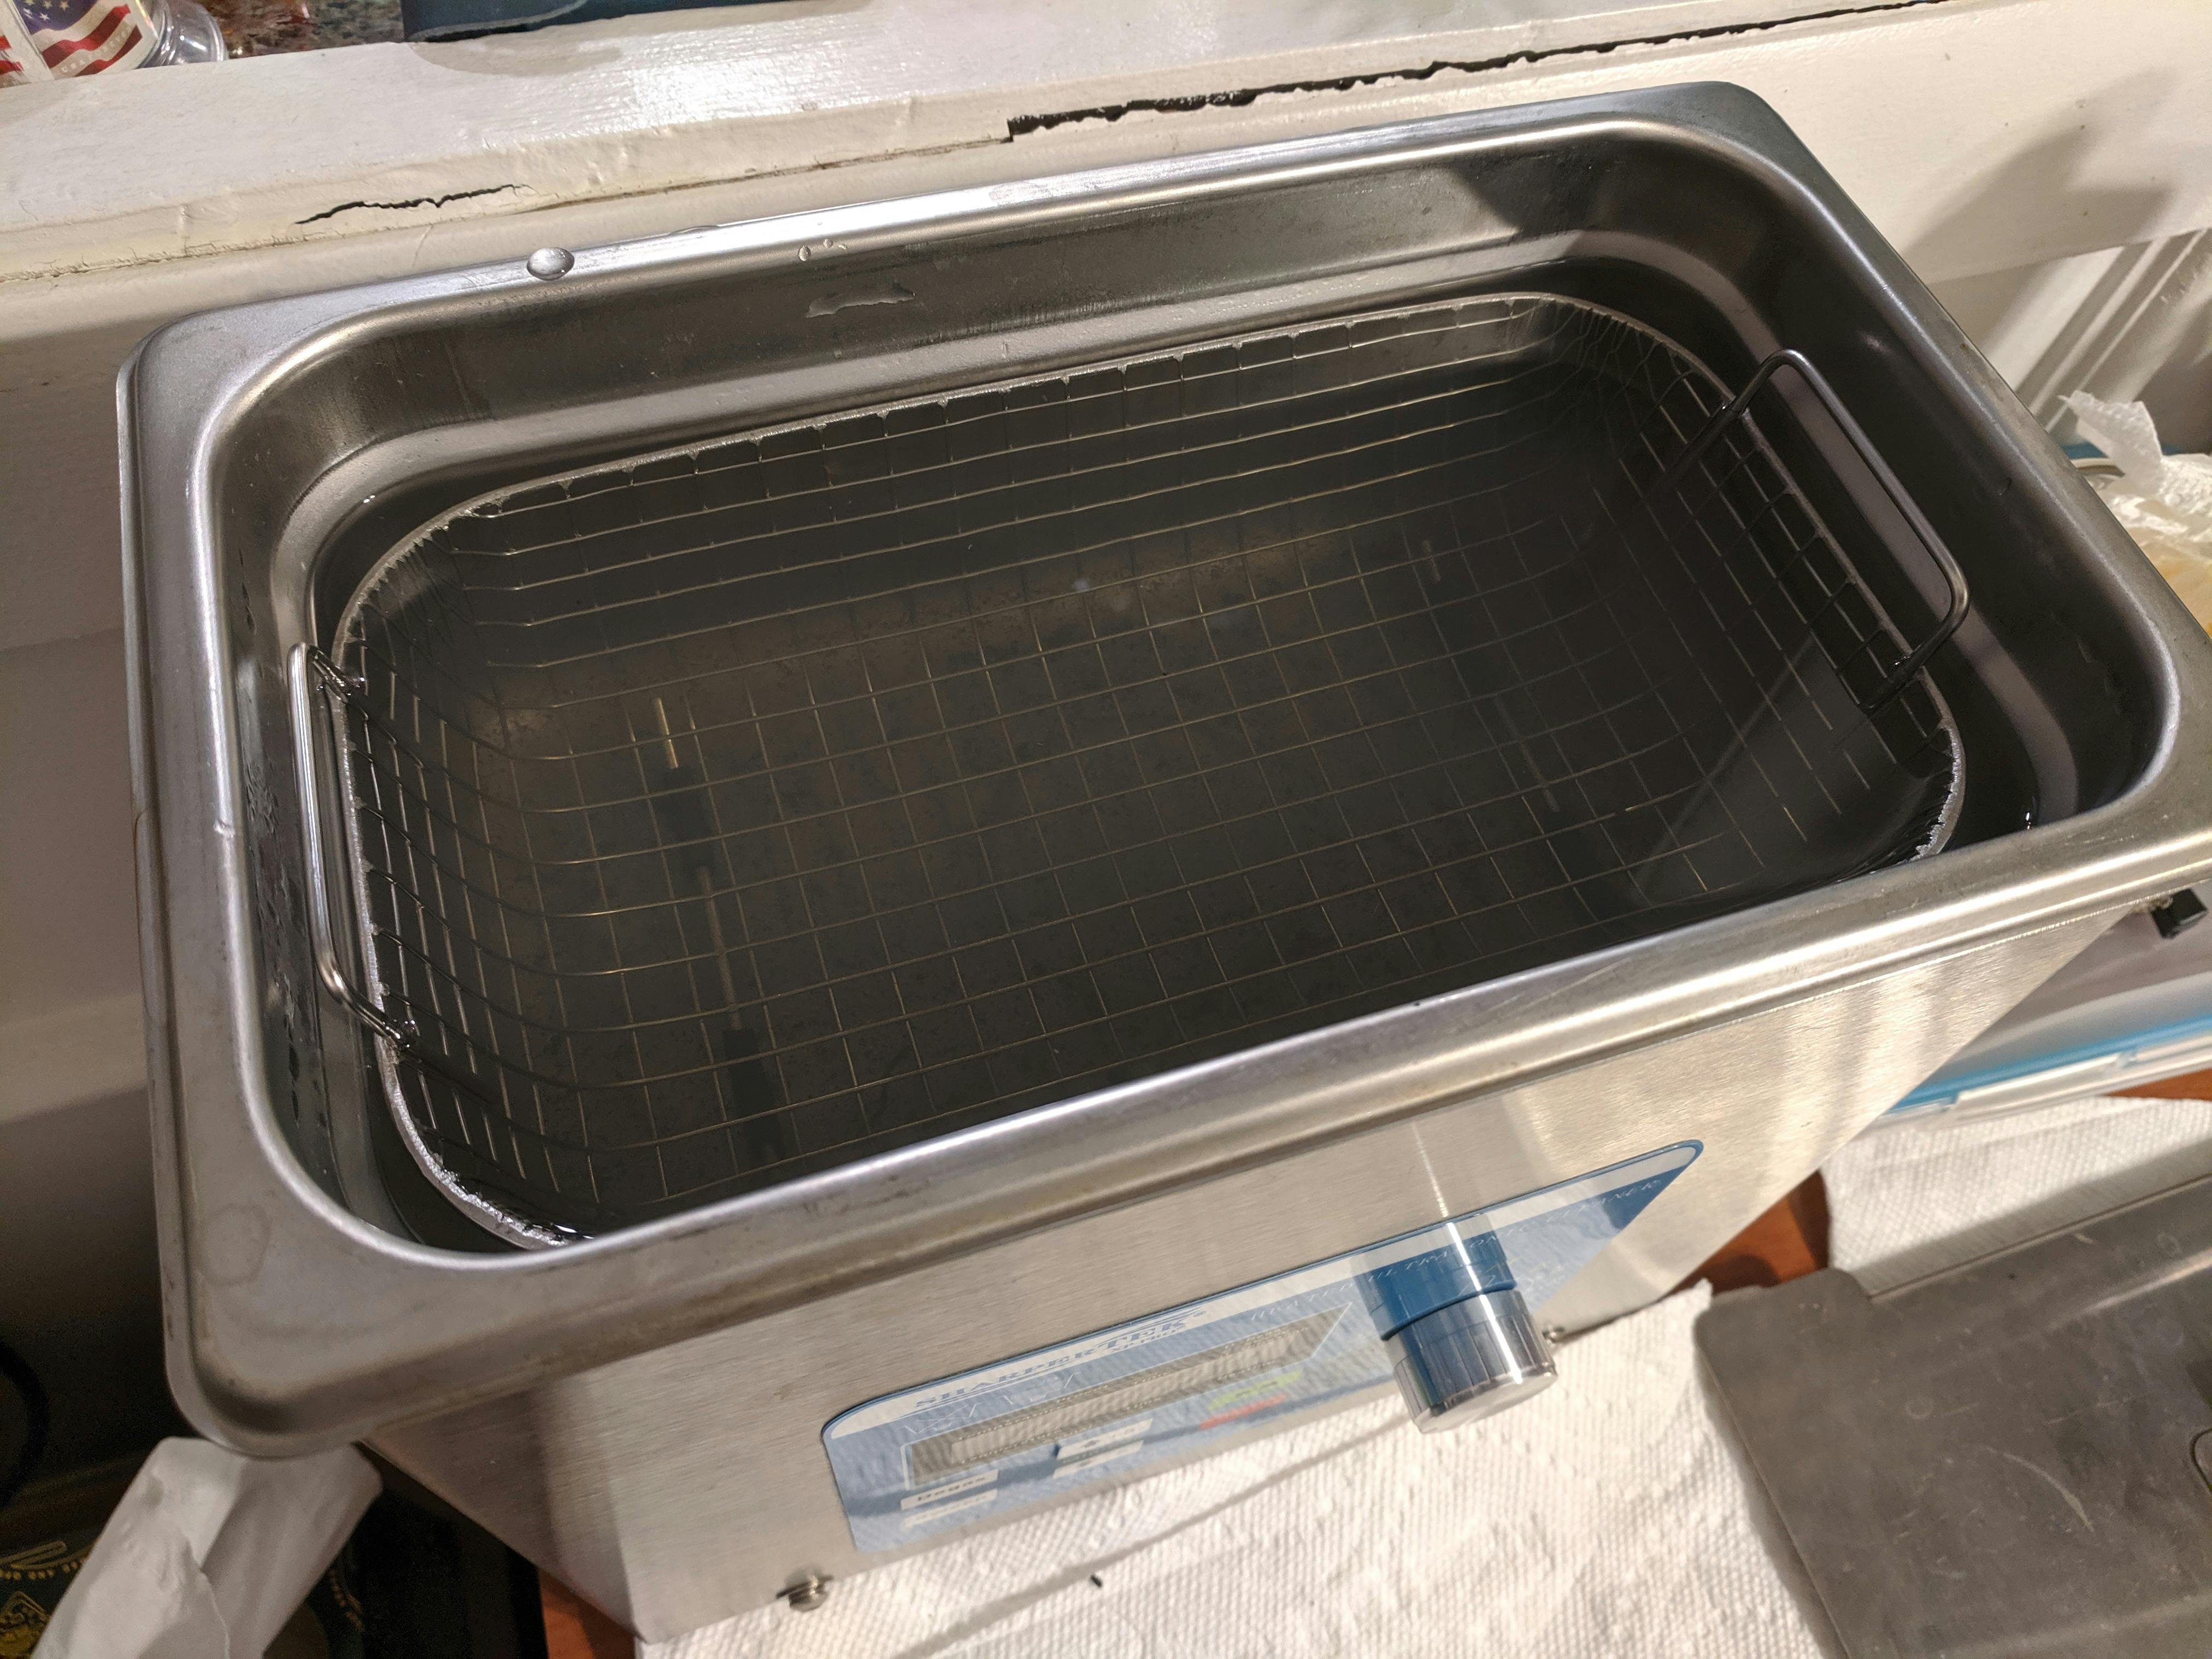 Mettler Cleaning Basket for 6L Ultrasonic Cleaner